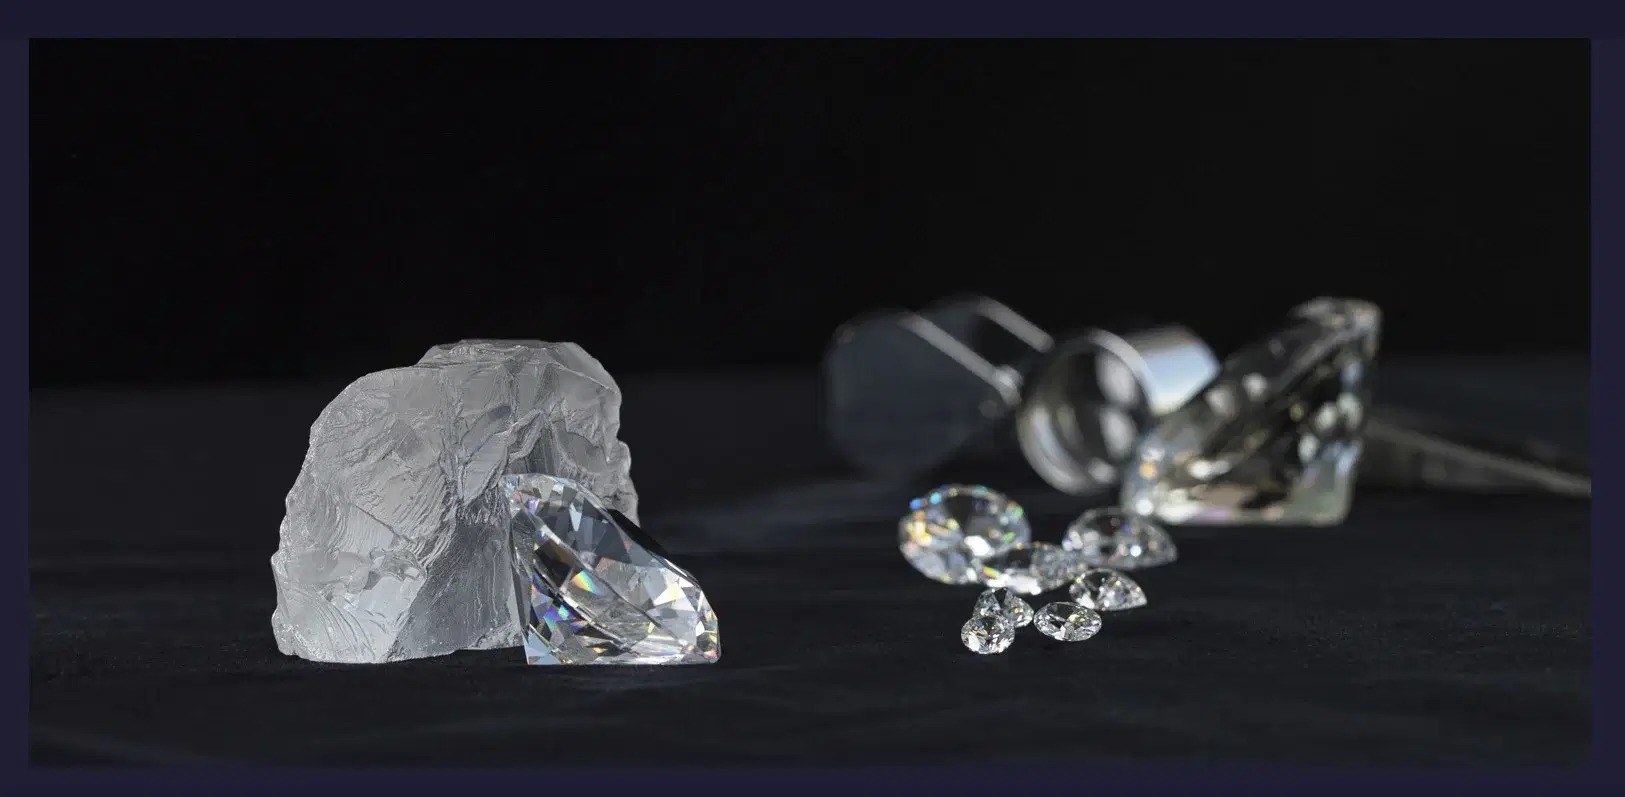 Diamond Wholesalers